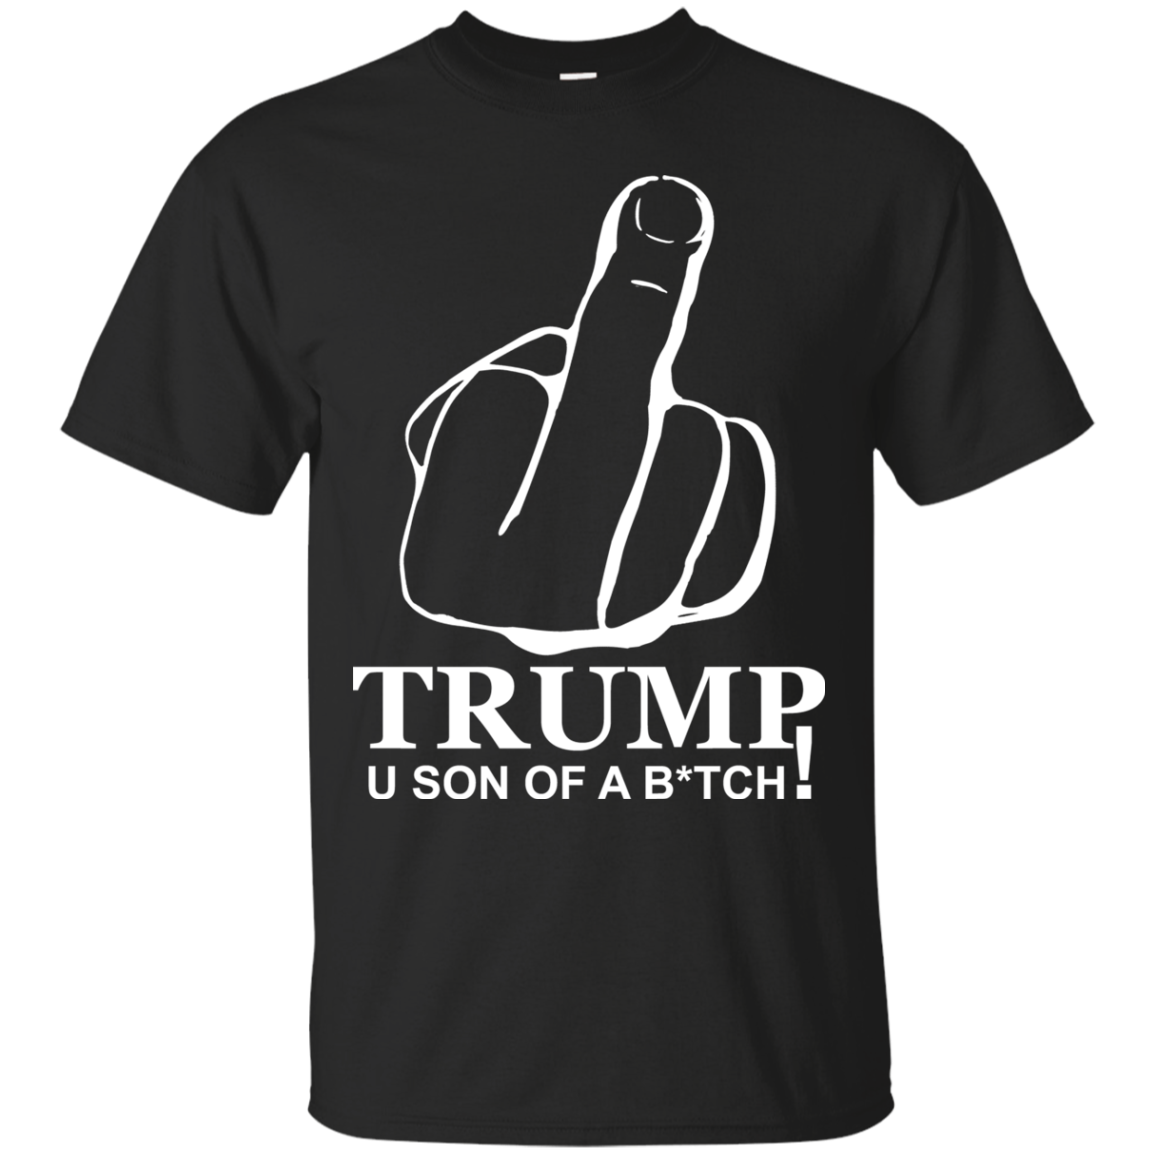 Lebron Trump shirt: U son of bitch t-shirt, hoodie